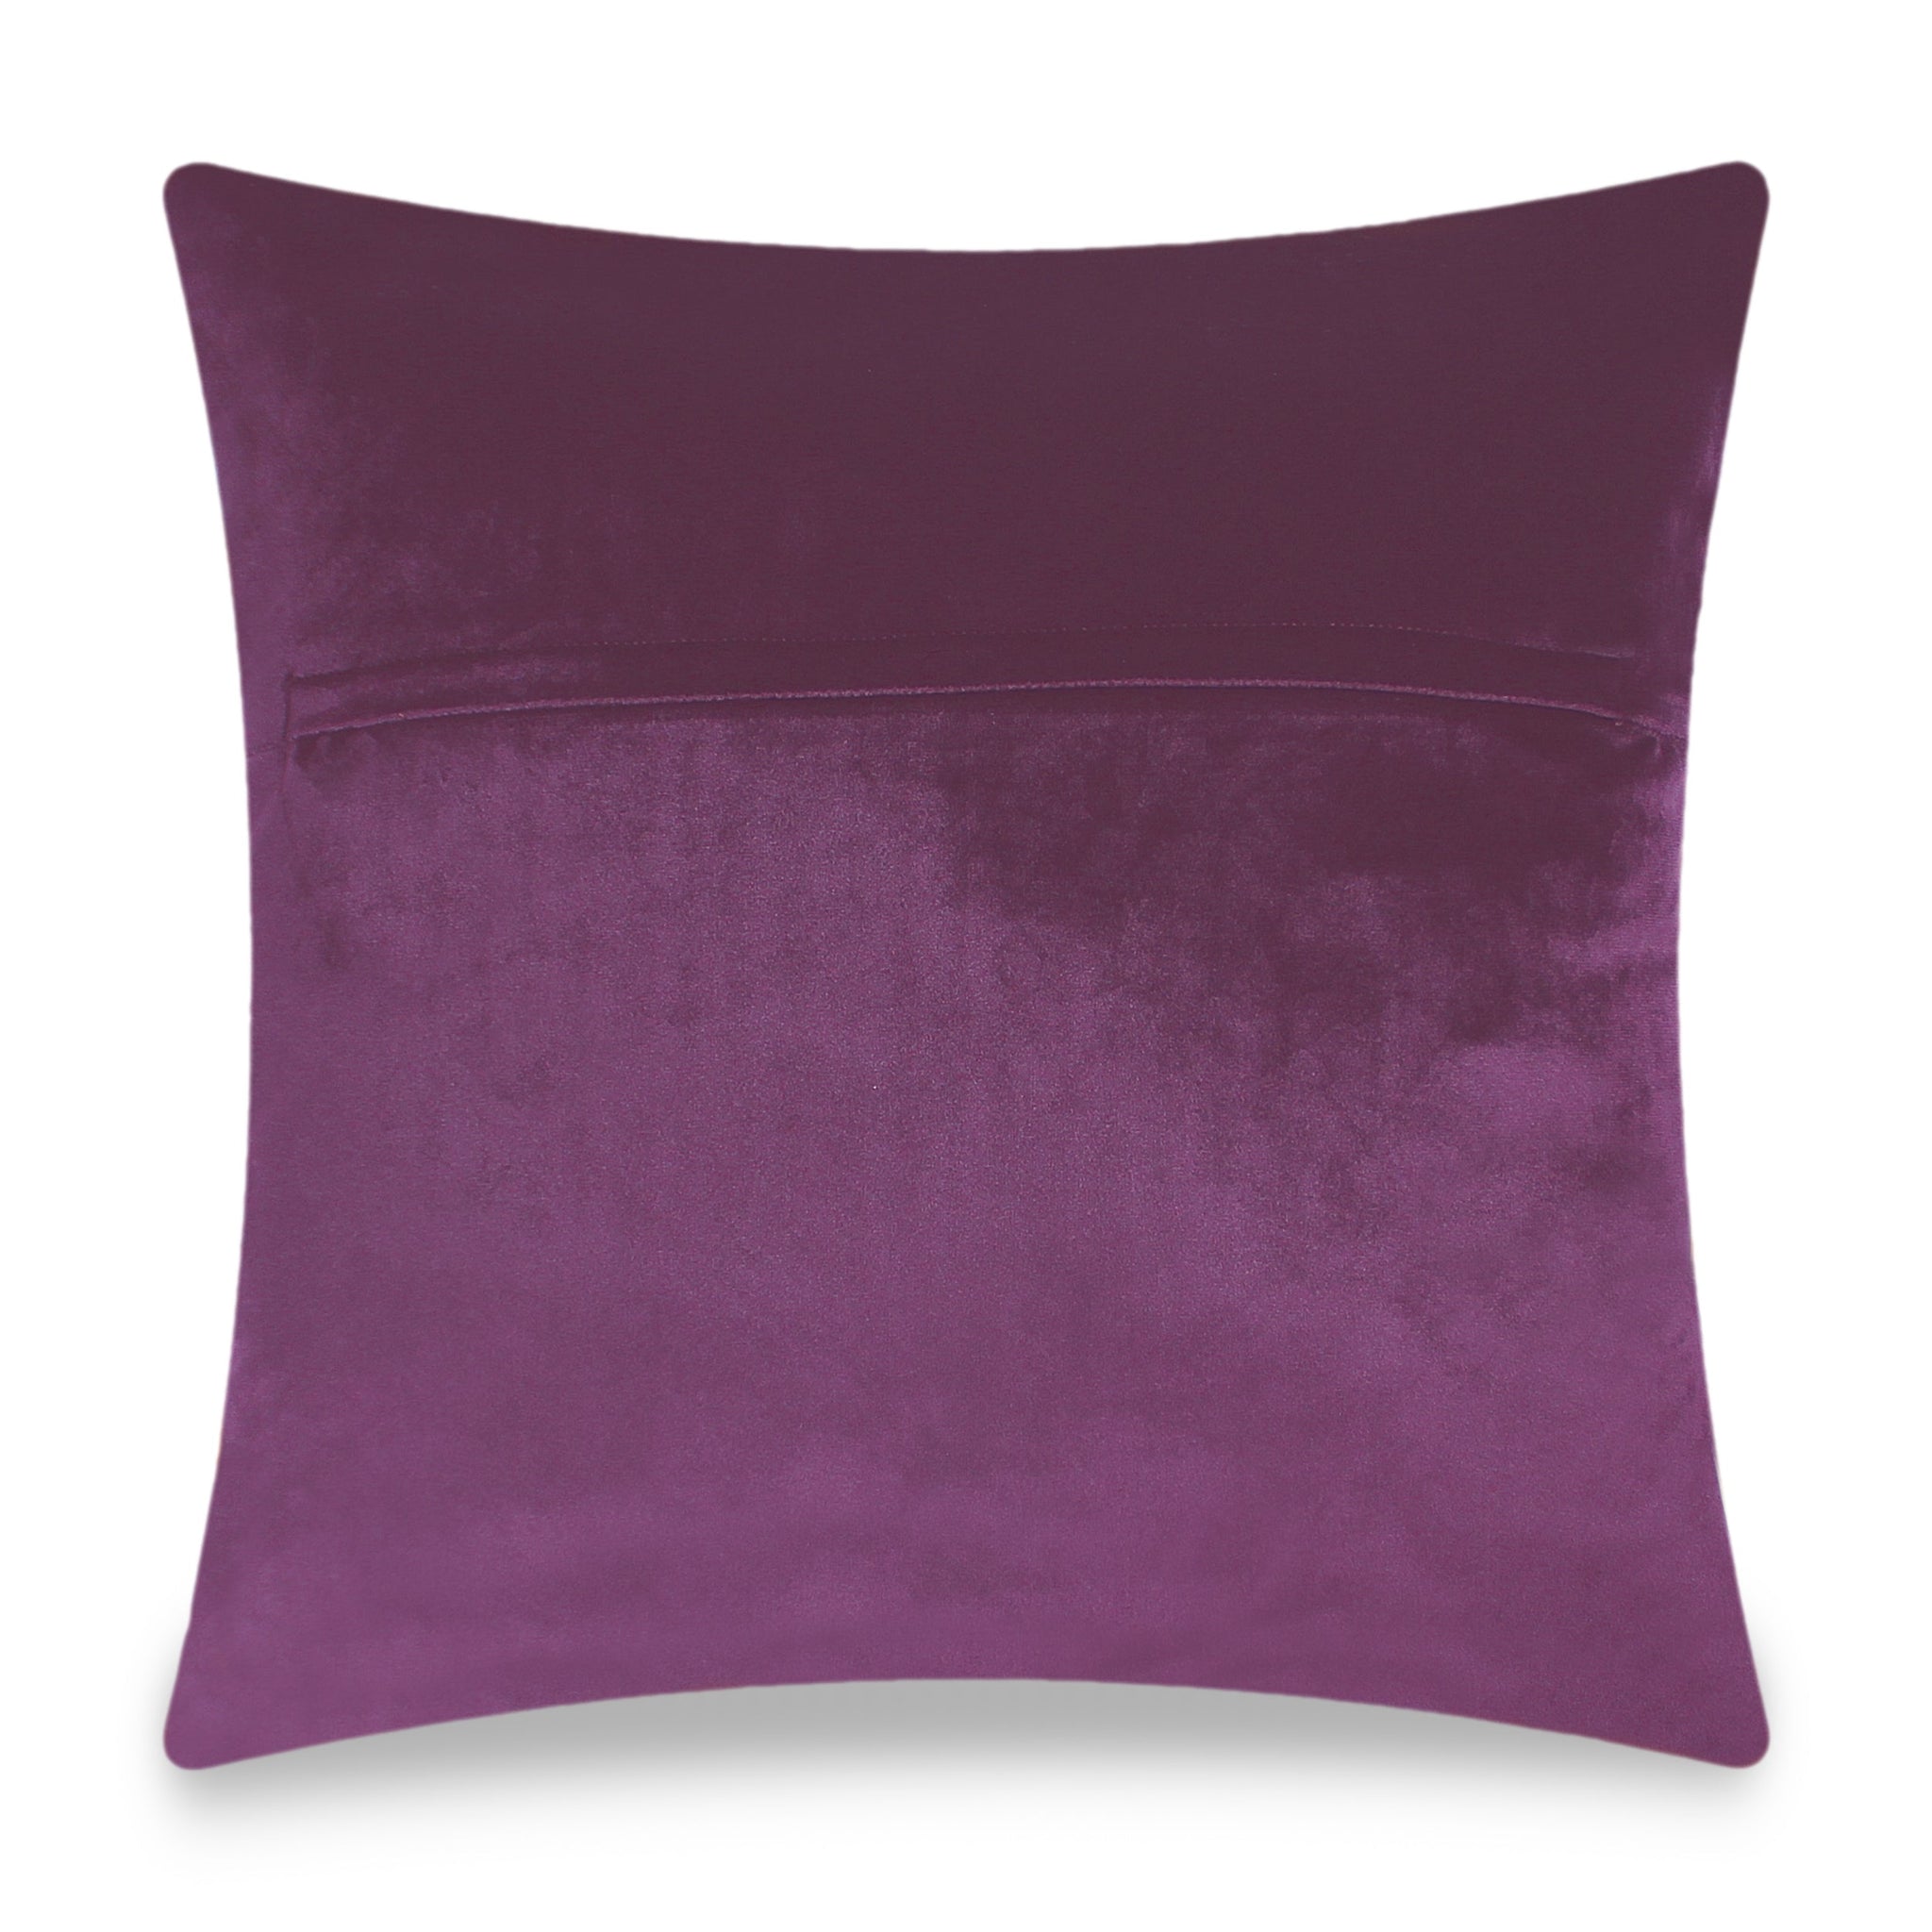 Velvet Cushion Cover Art Décor Marilyn Monroe Decorative Pillow Cover Home Decor Throw Pillow for Sofa Chair Bedroom 45x45 cm 18x18 In